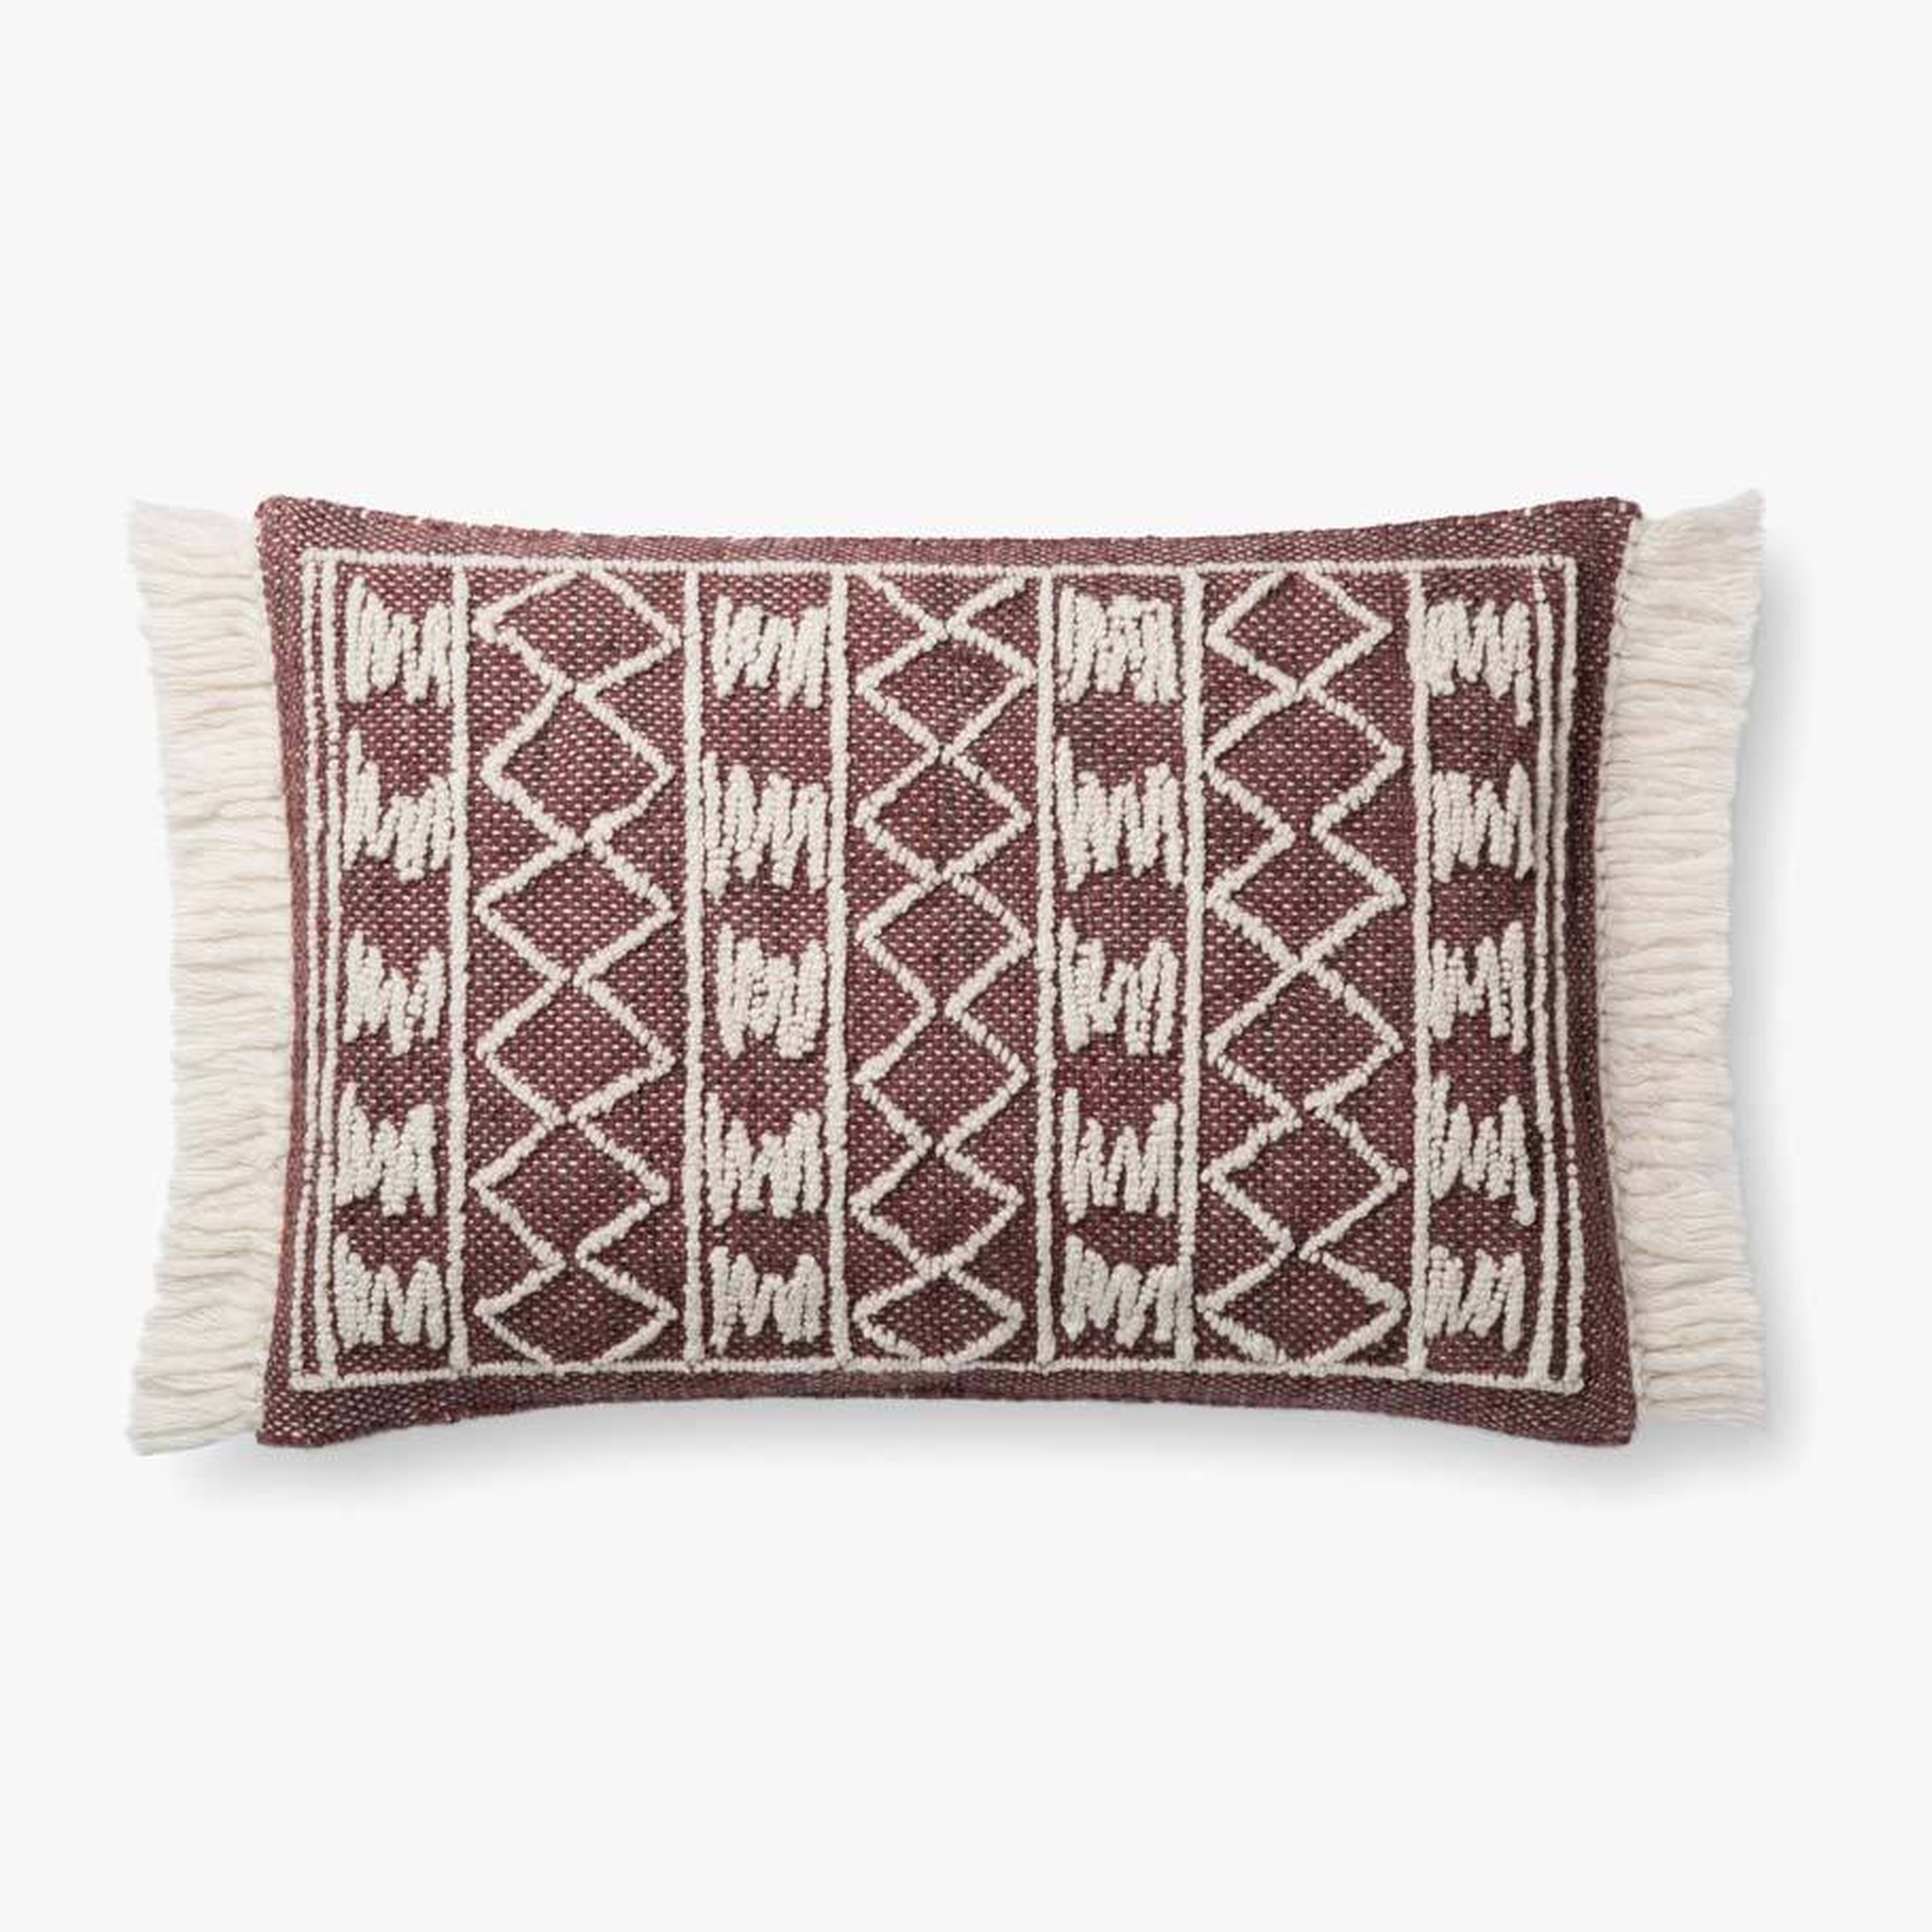 Embroidered Fringe Boho Lumbar Pillow, Poly Fill, Burgundy, 26" x 16" - Loloi II